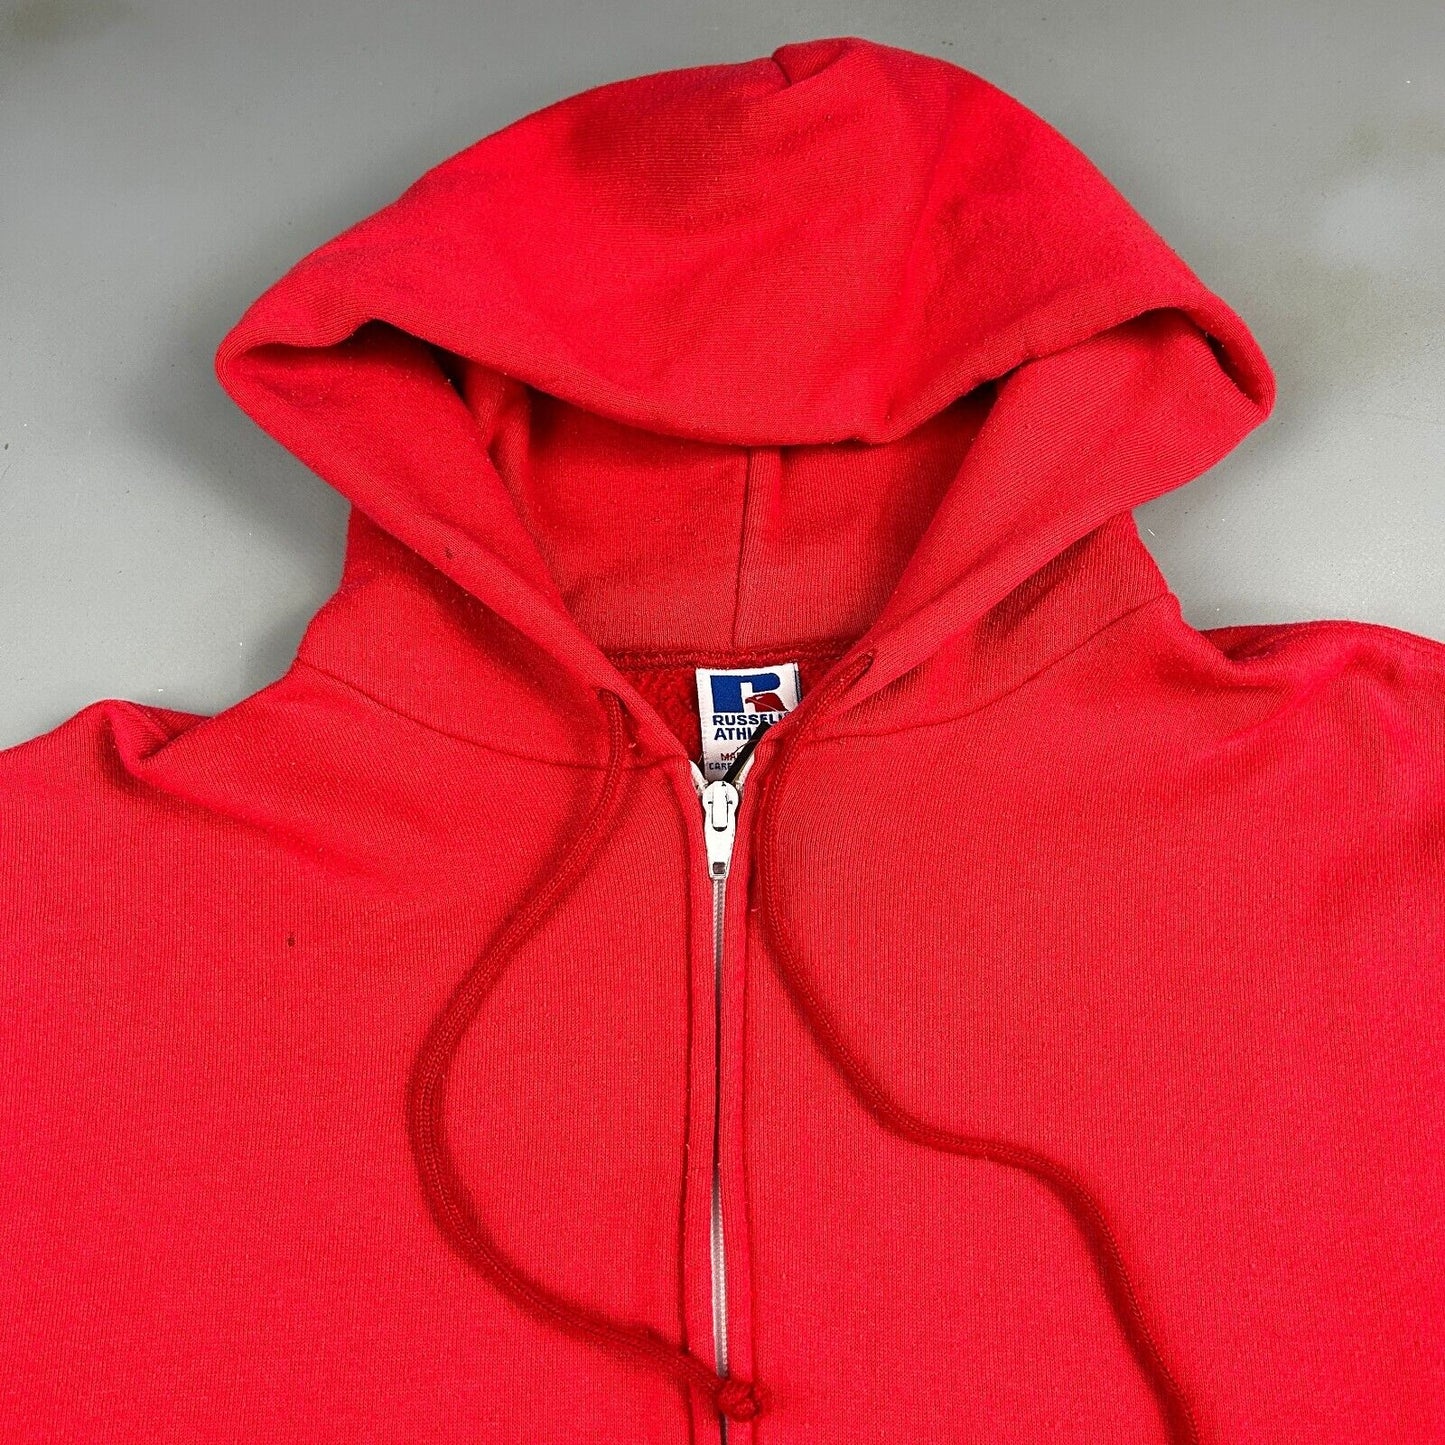 VINTAGE 90s Russell Athletic Blank Red Zip Up Hoodie Sweater sz Large Mens